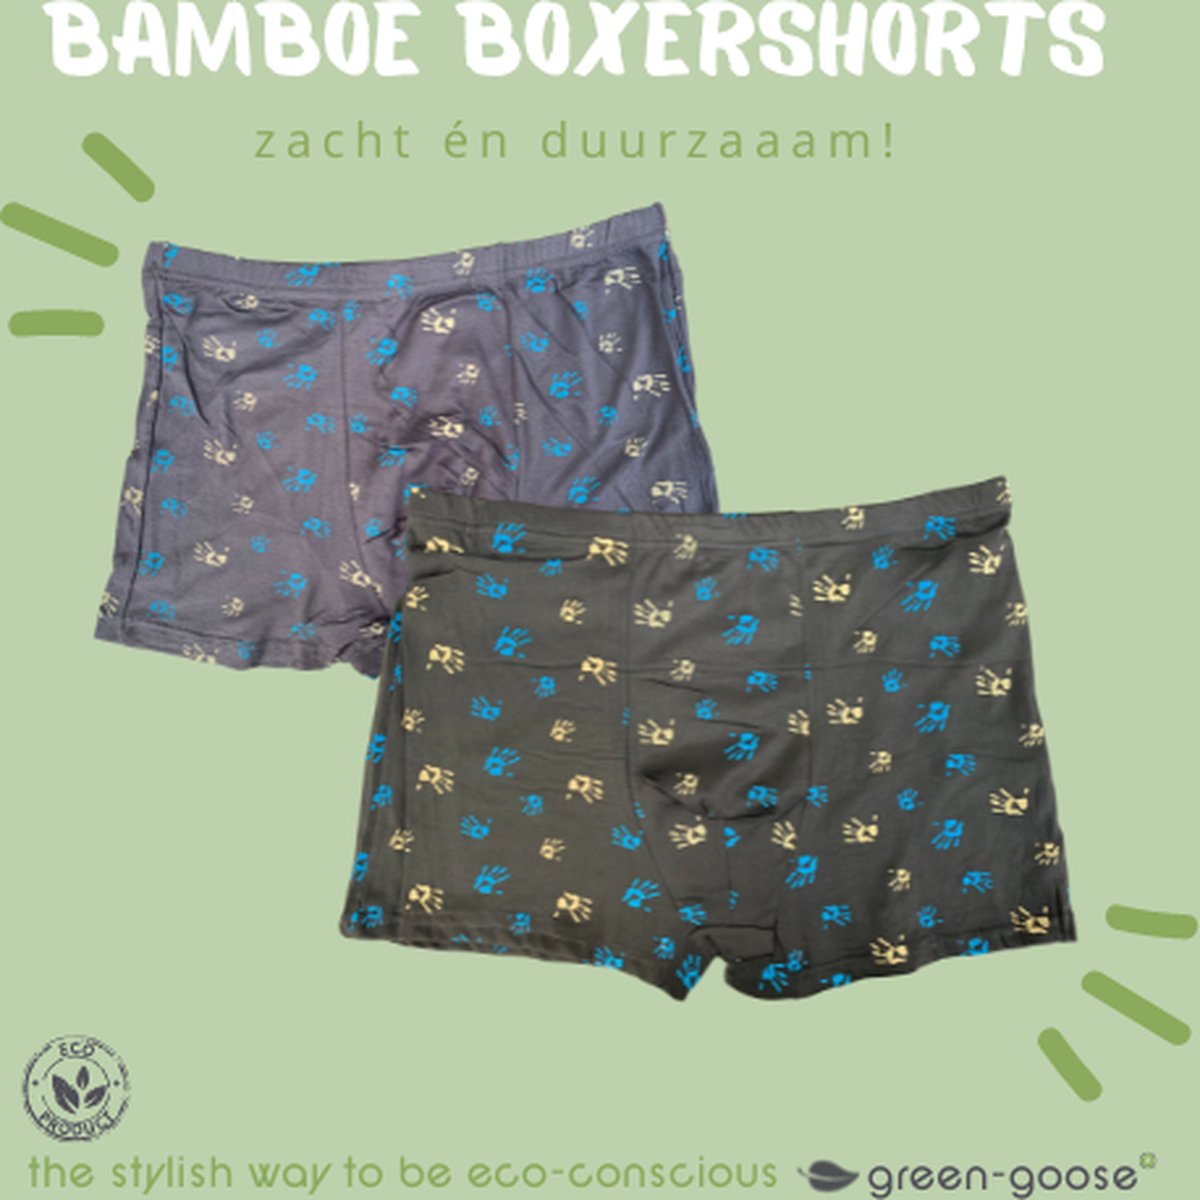 green-goose® Bamboe Boxershorts | 2 Stuks | Maat M | Hand | Duurzaam | Stretch | Ademend en Thermoregulerend